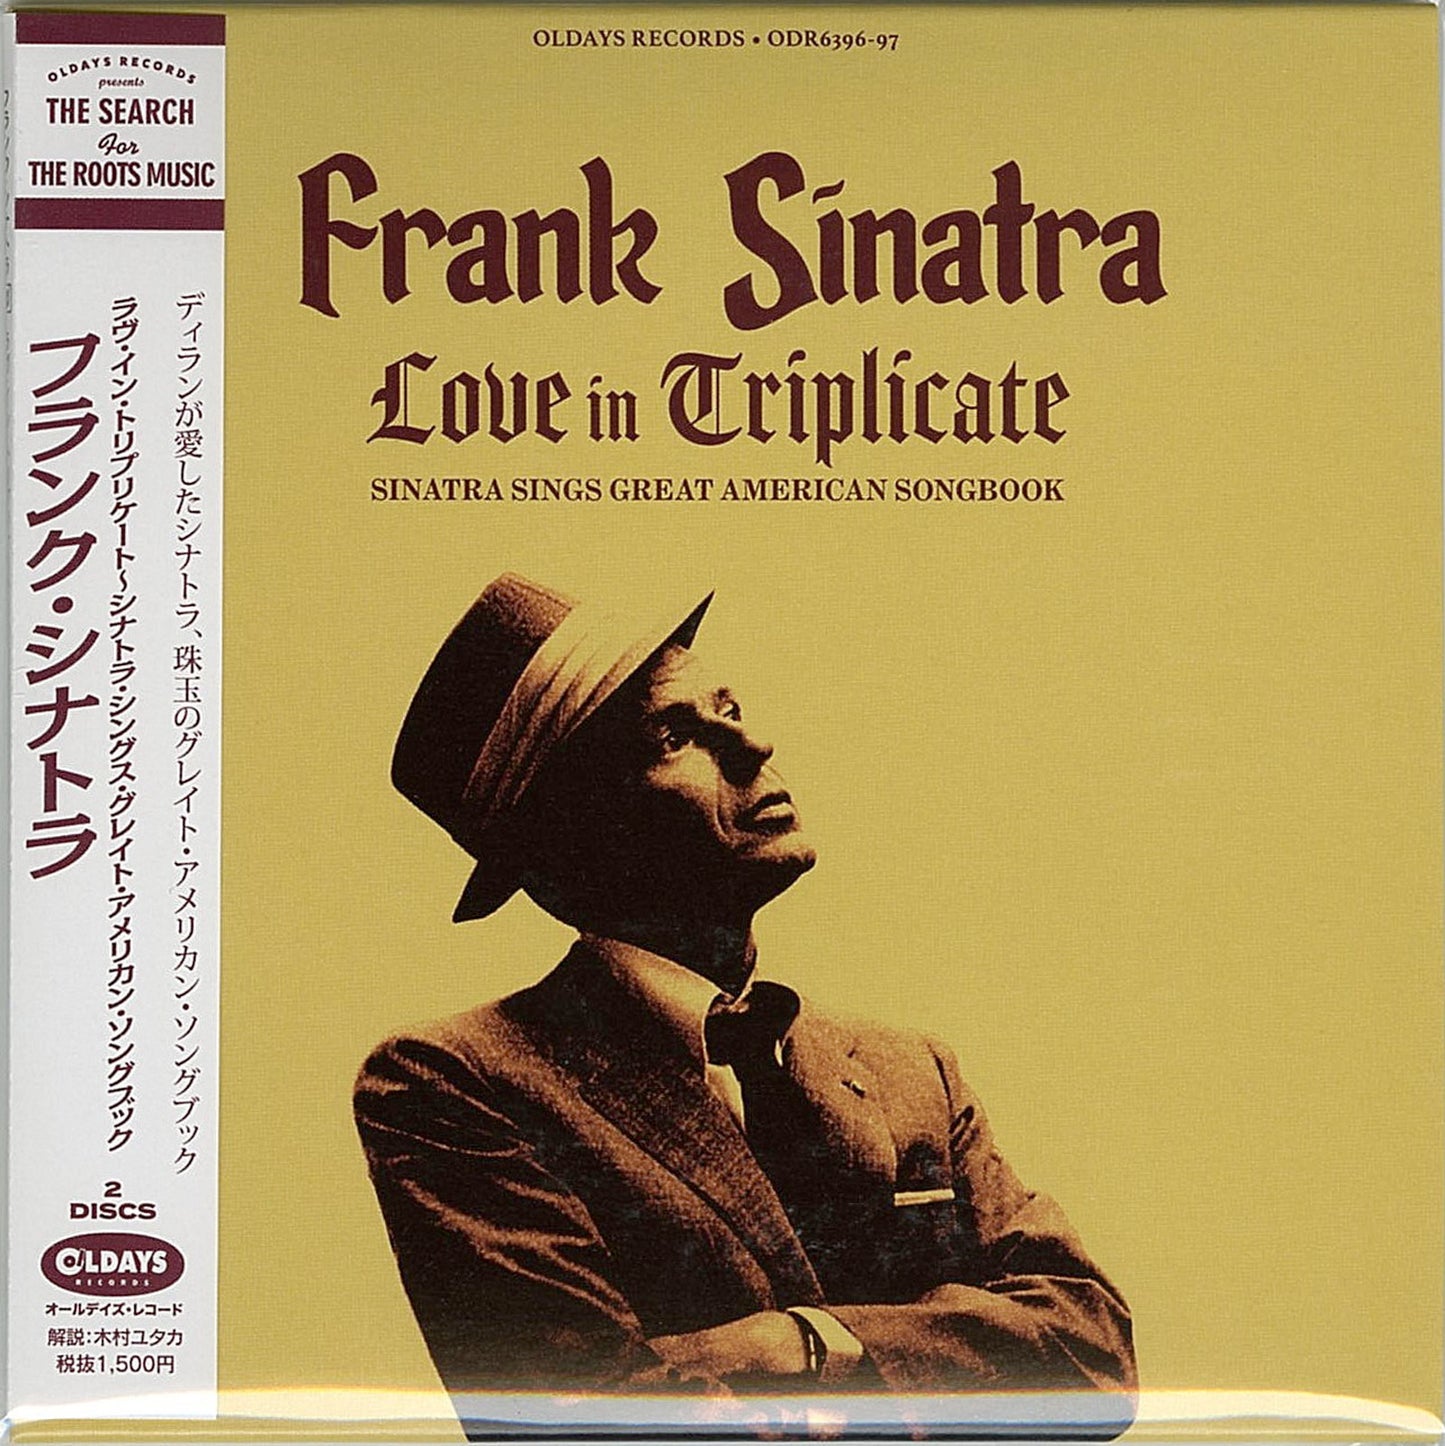 Frank Sinatra - Love In Triplicate Sinatra Sings Great American Songbook - Japan  2 Mini LP CD